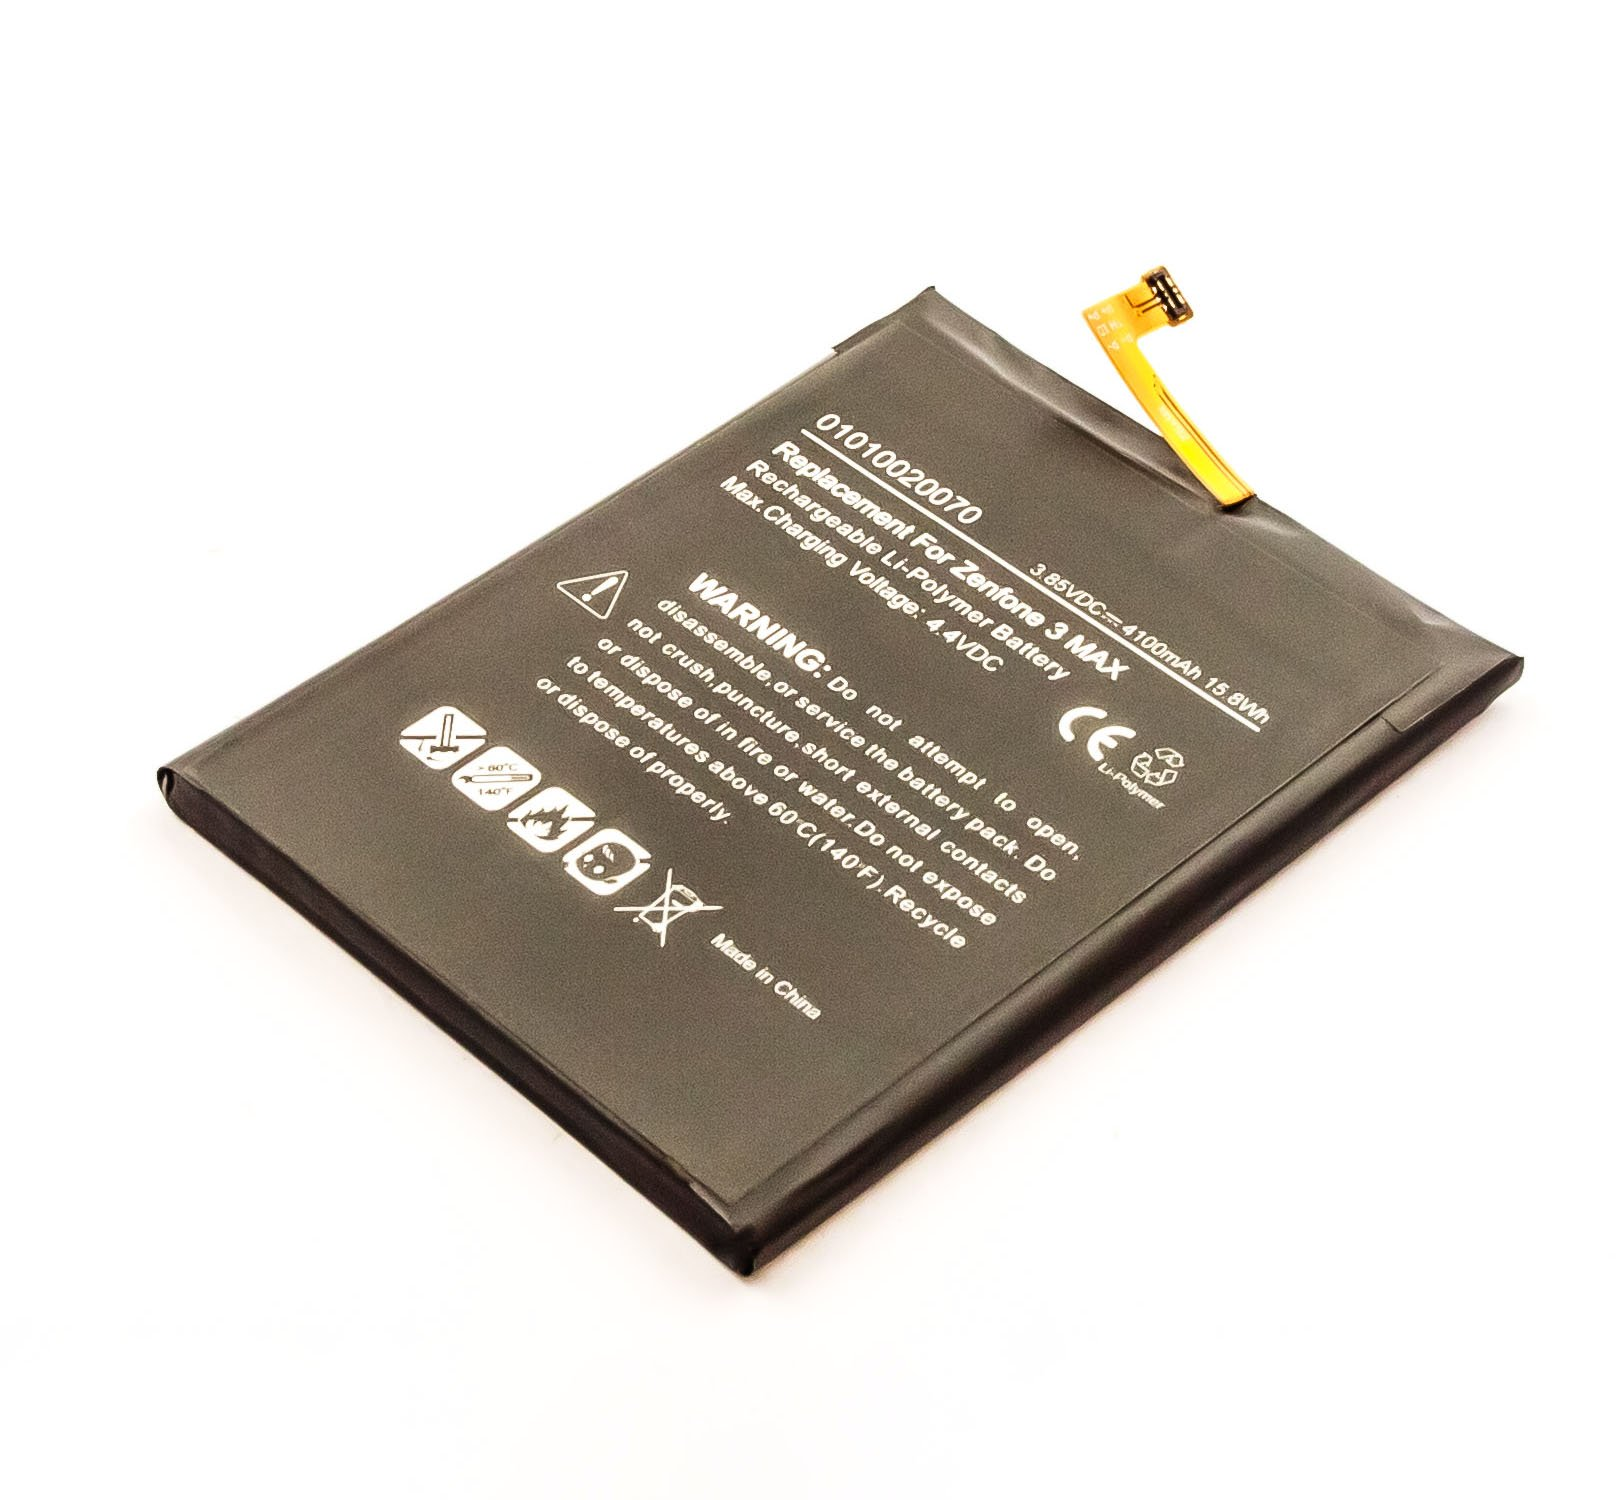 AGI Akku kompatibel mAh 3.9 Asus ZenFone Max 5.5 Volt, 4100 Li-Pol mit 3 Handy-/Smartphoneakku